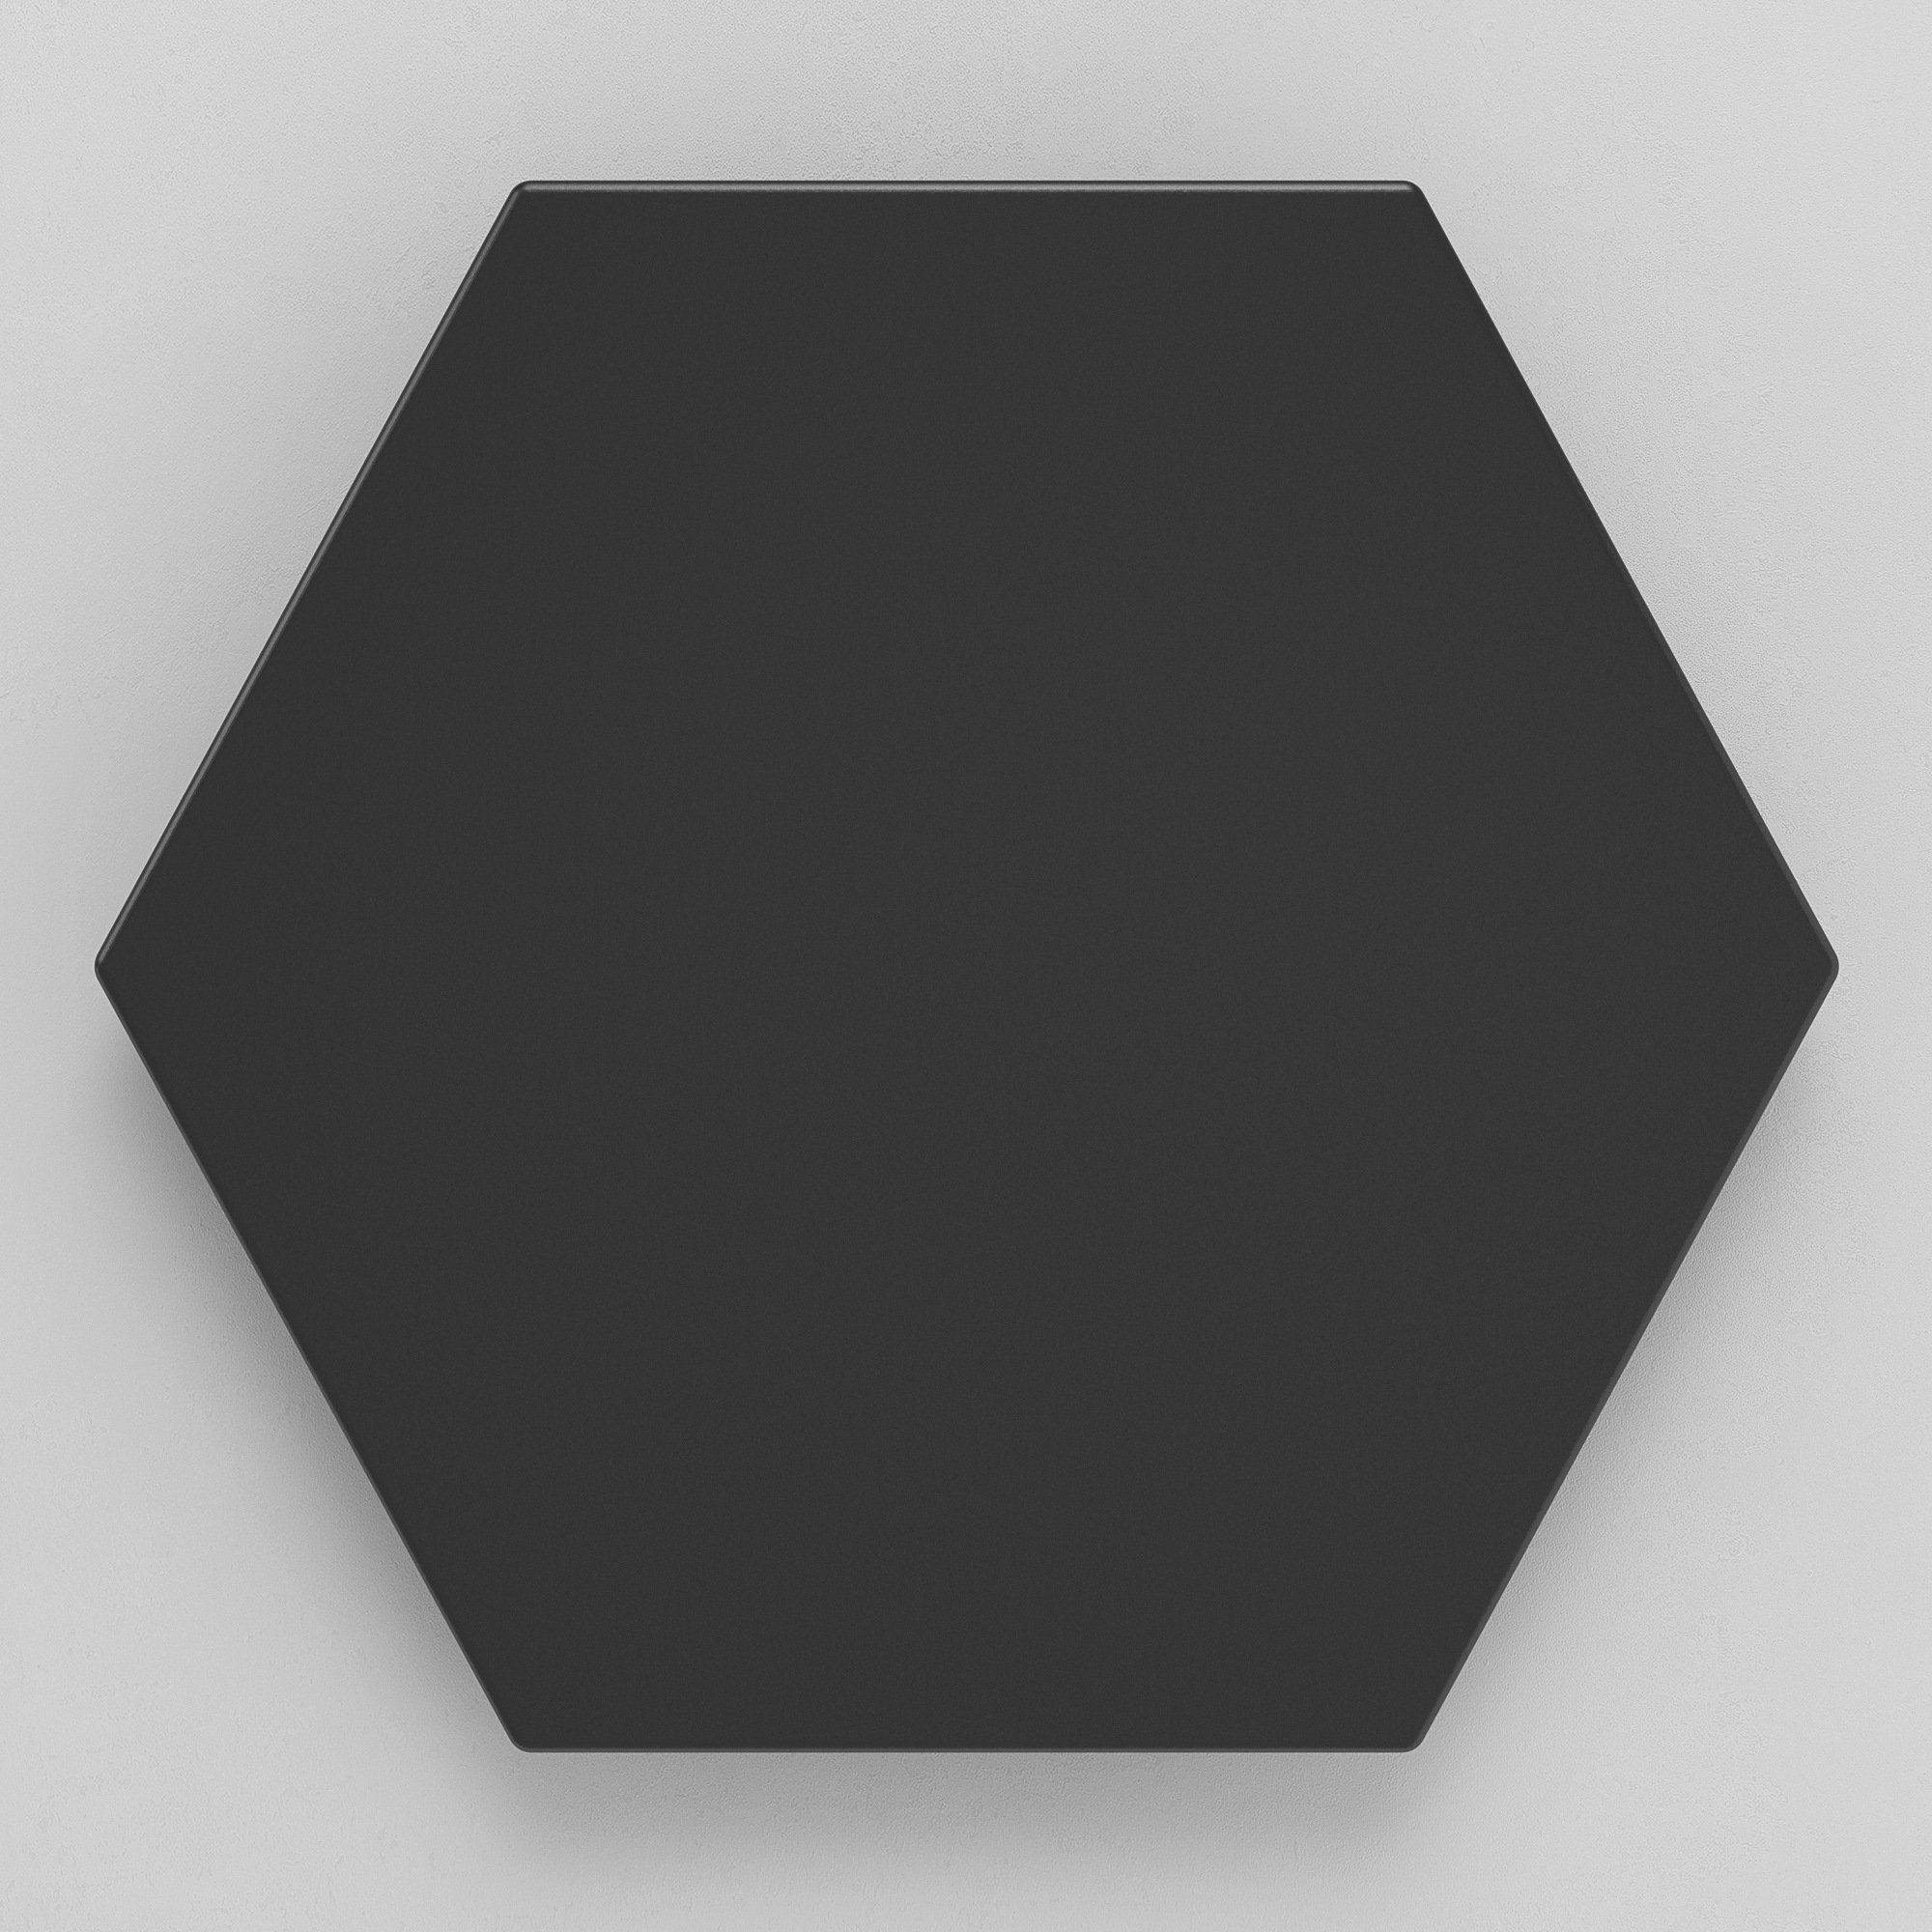 Hexagon Fliese schwarz Sechseckige Fliese SOLID BLACK Fliese